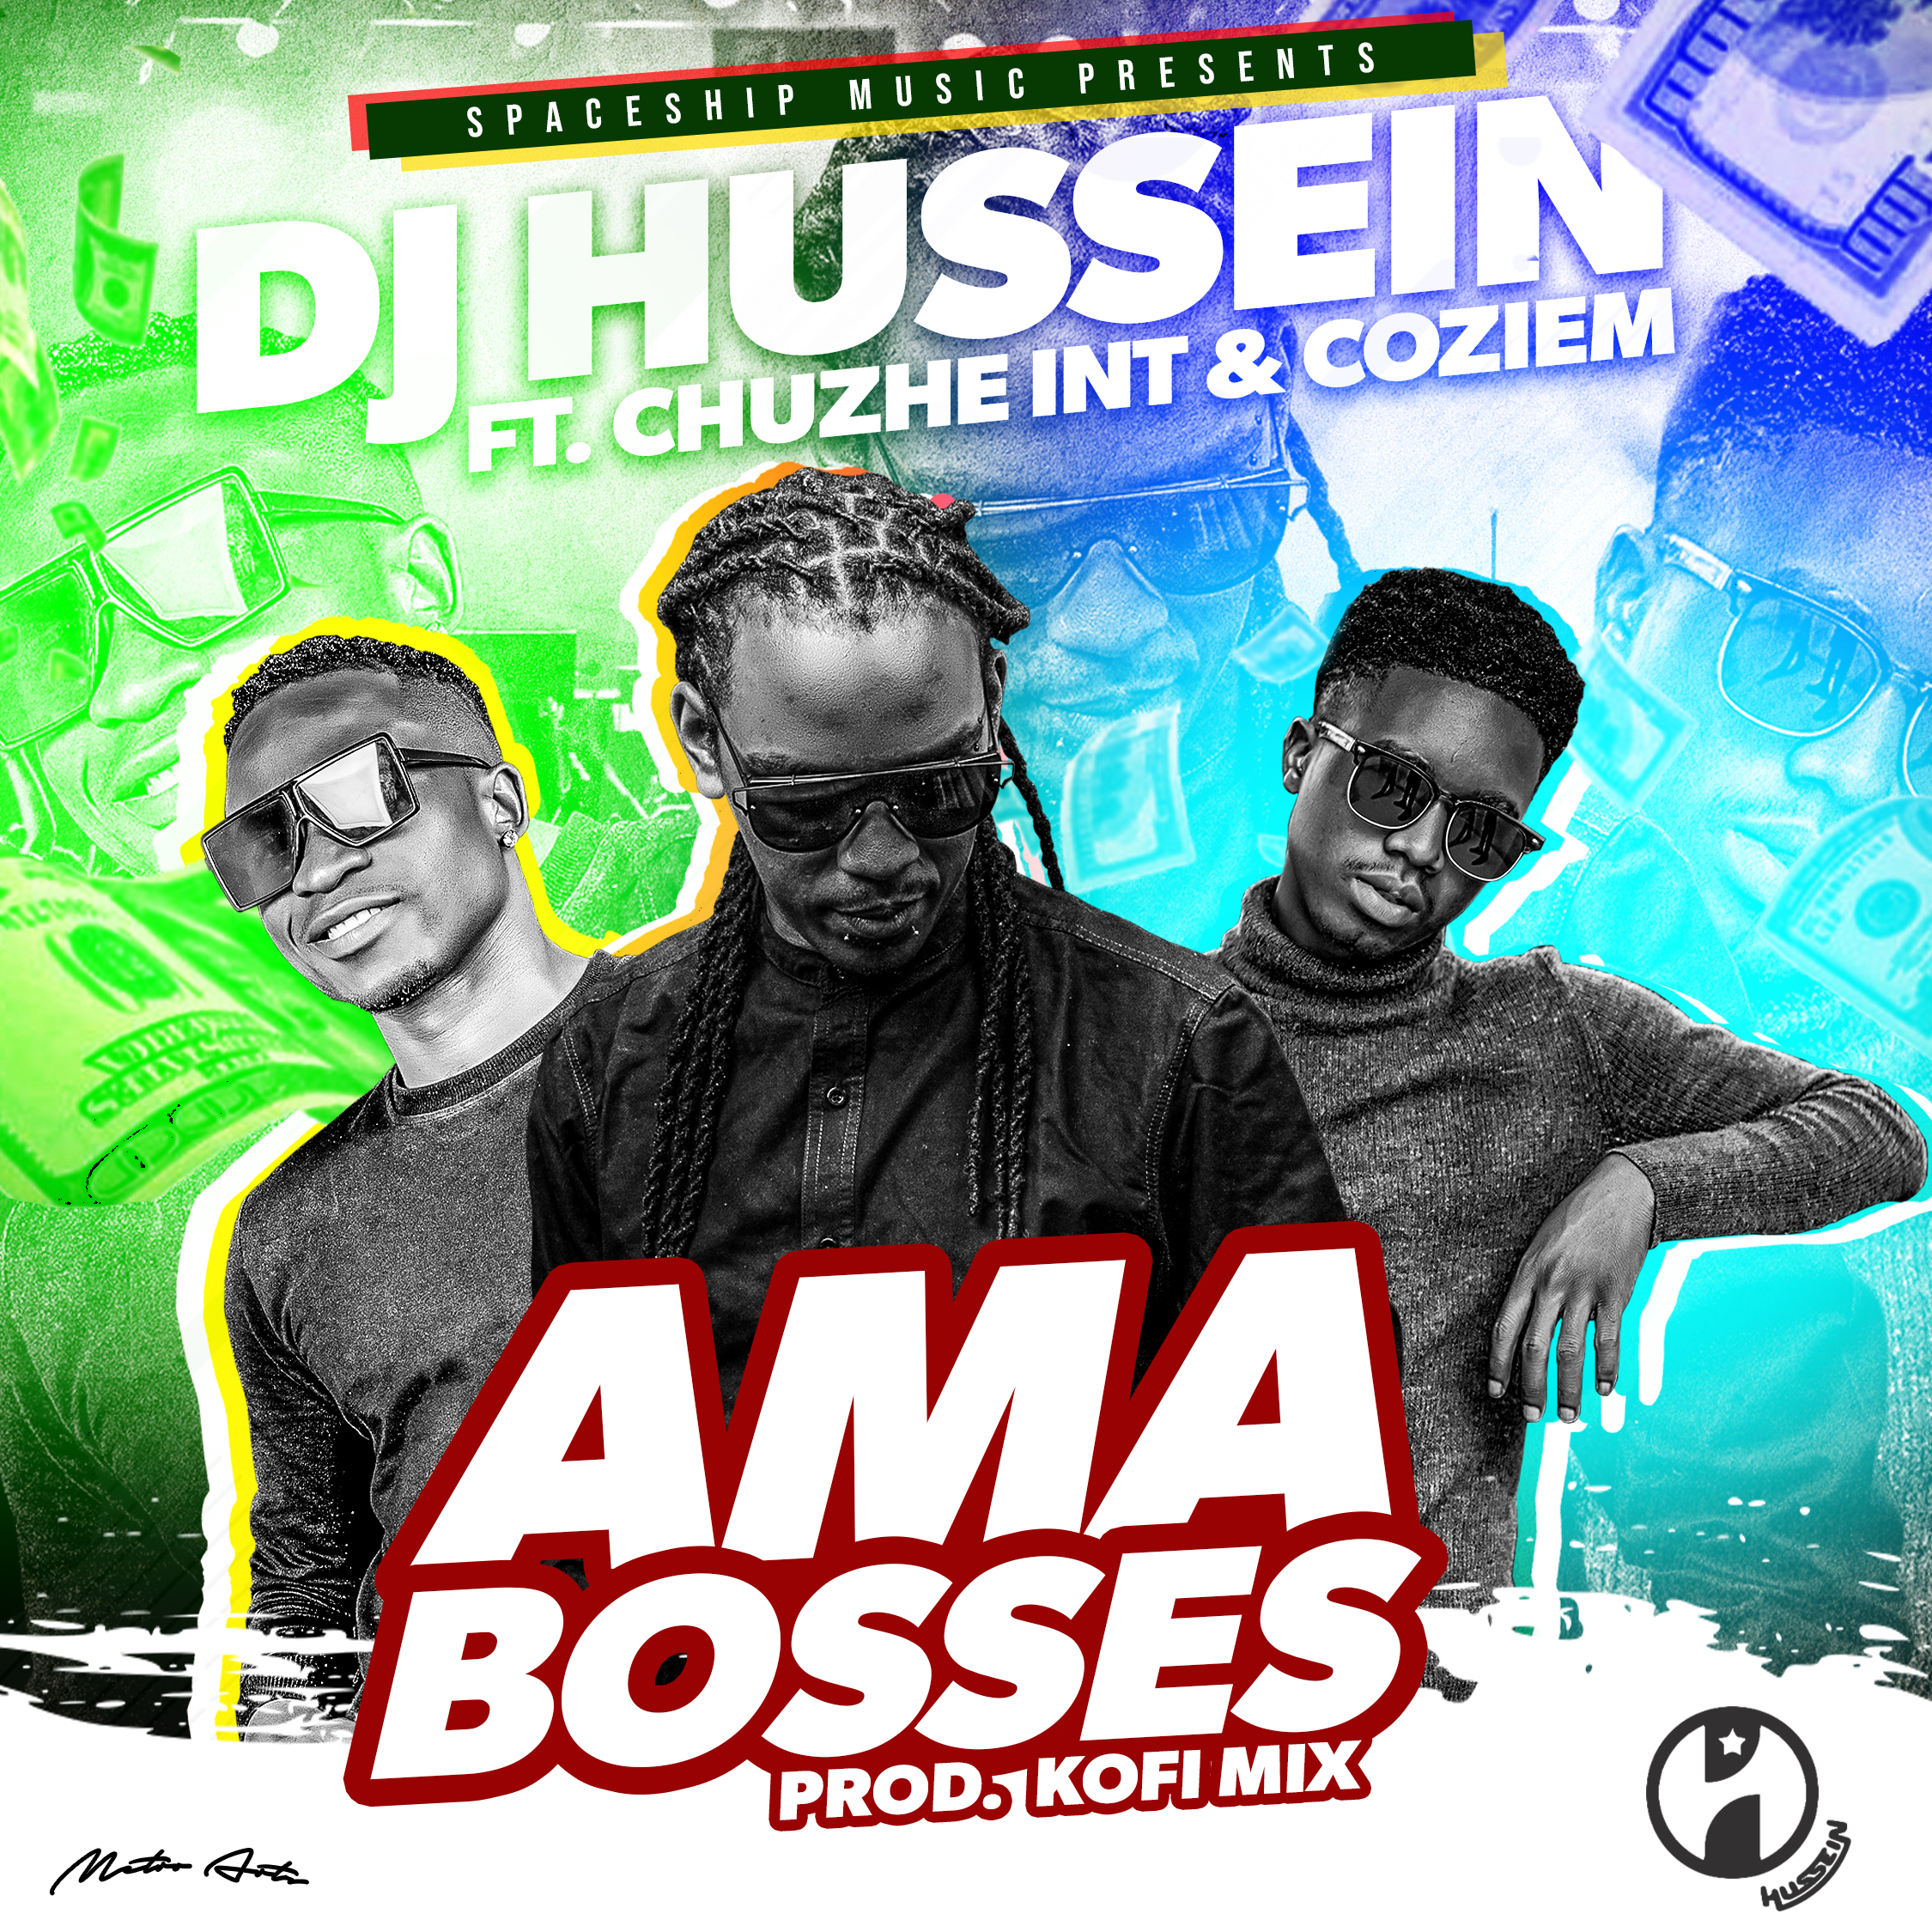 DOWNLOAD:  DJ Hussein ft. Chuzhe Int & Coziem - "Ama Bosses" Mp3